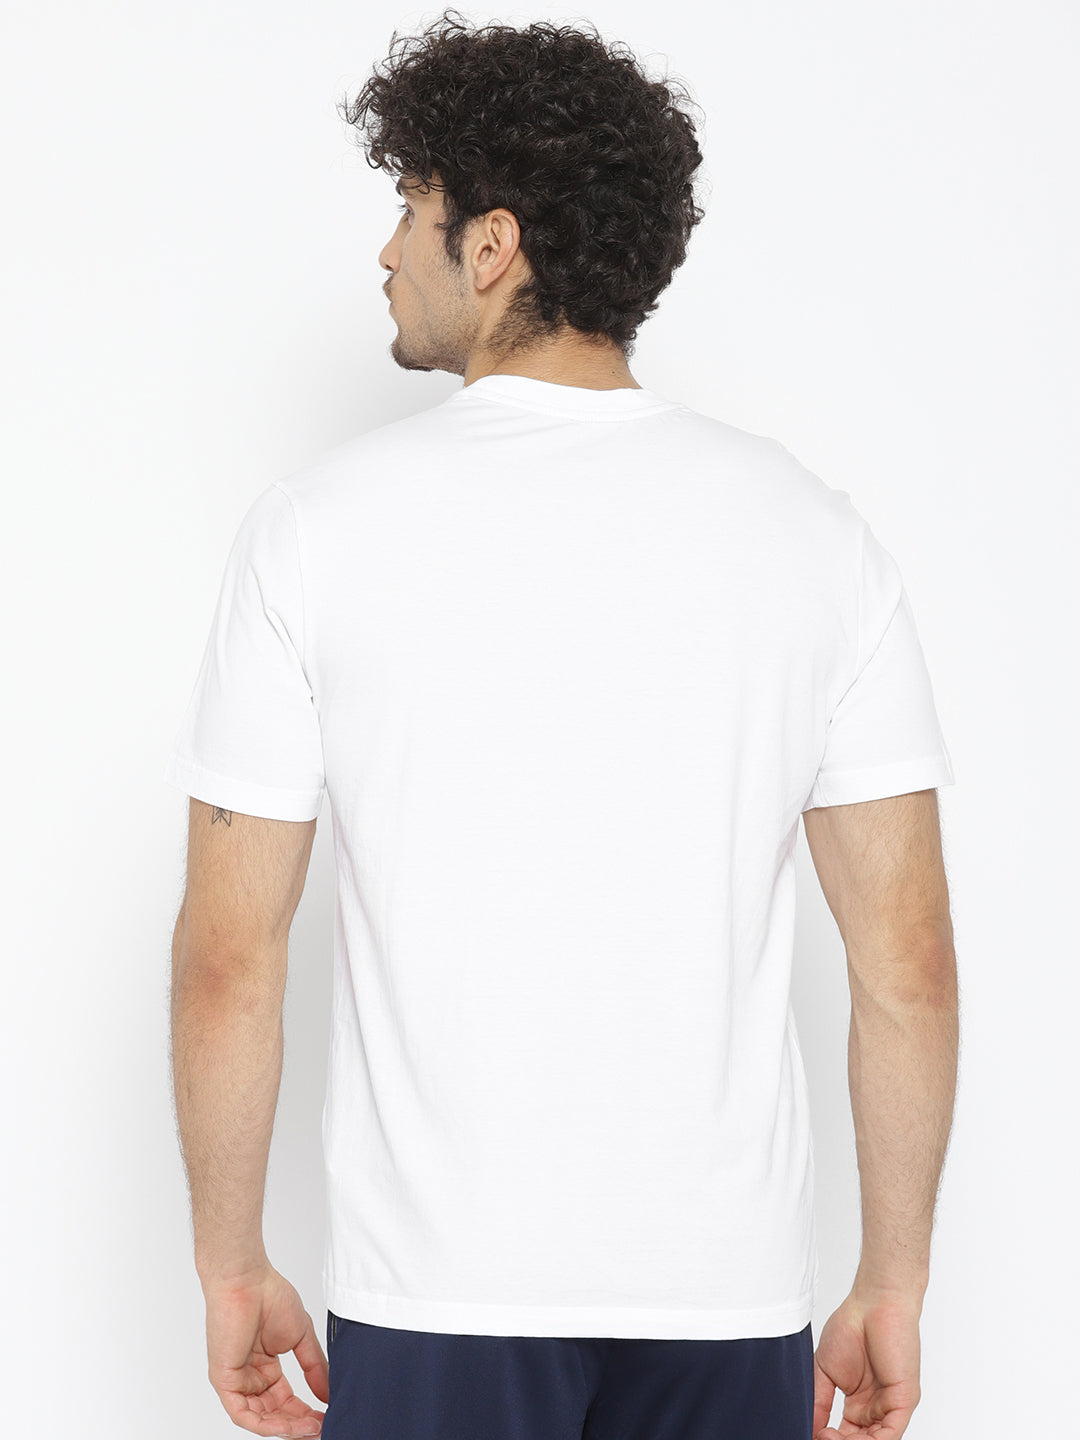 ALCIS Men Printed White Tee T-Shirt